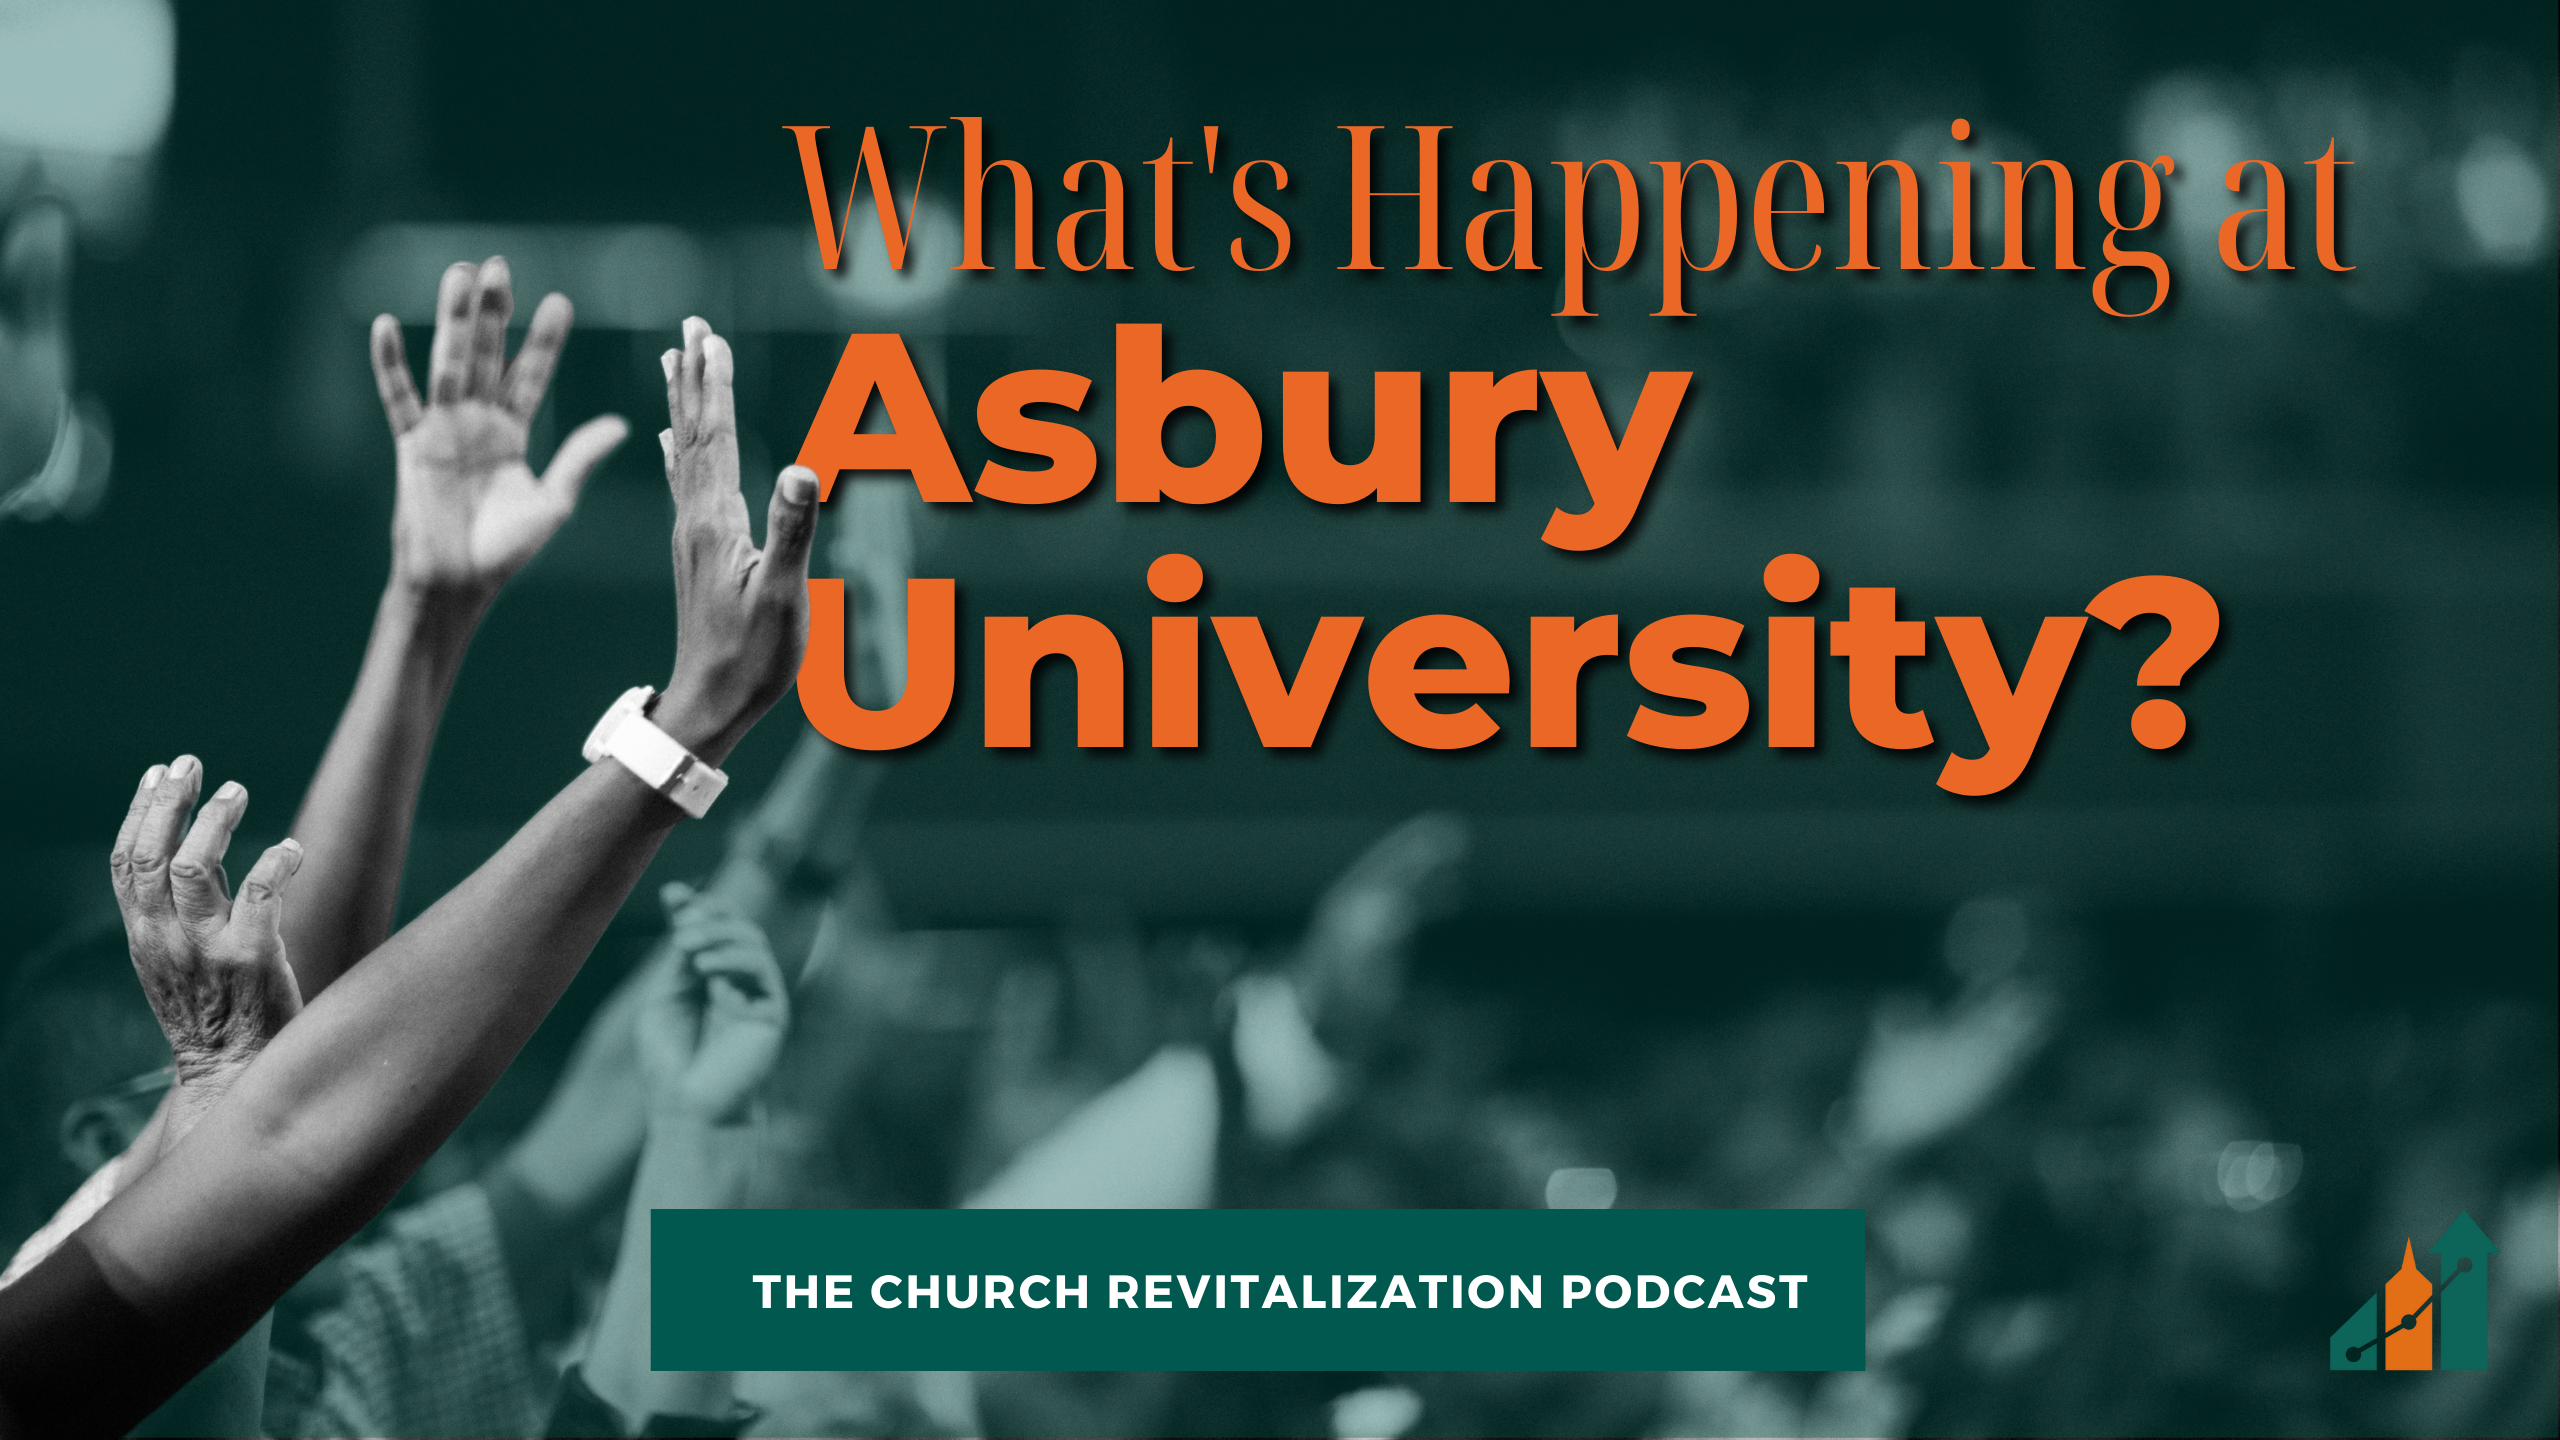 What's Happening at Asbury University?